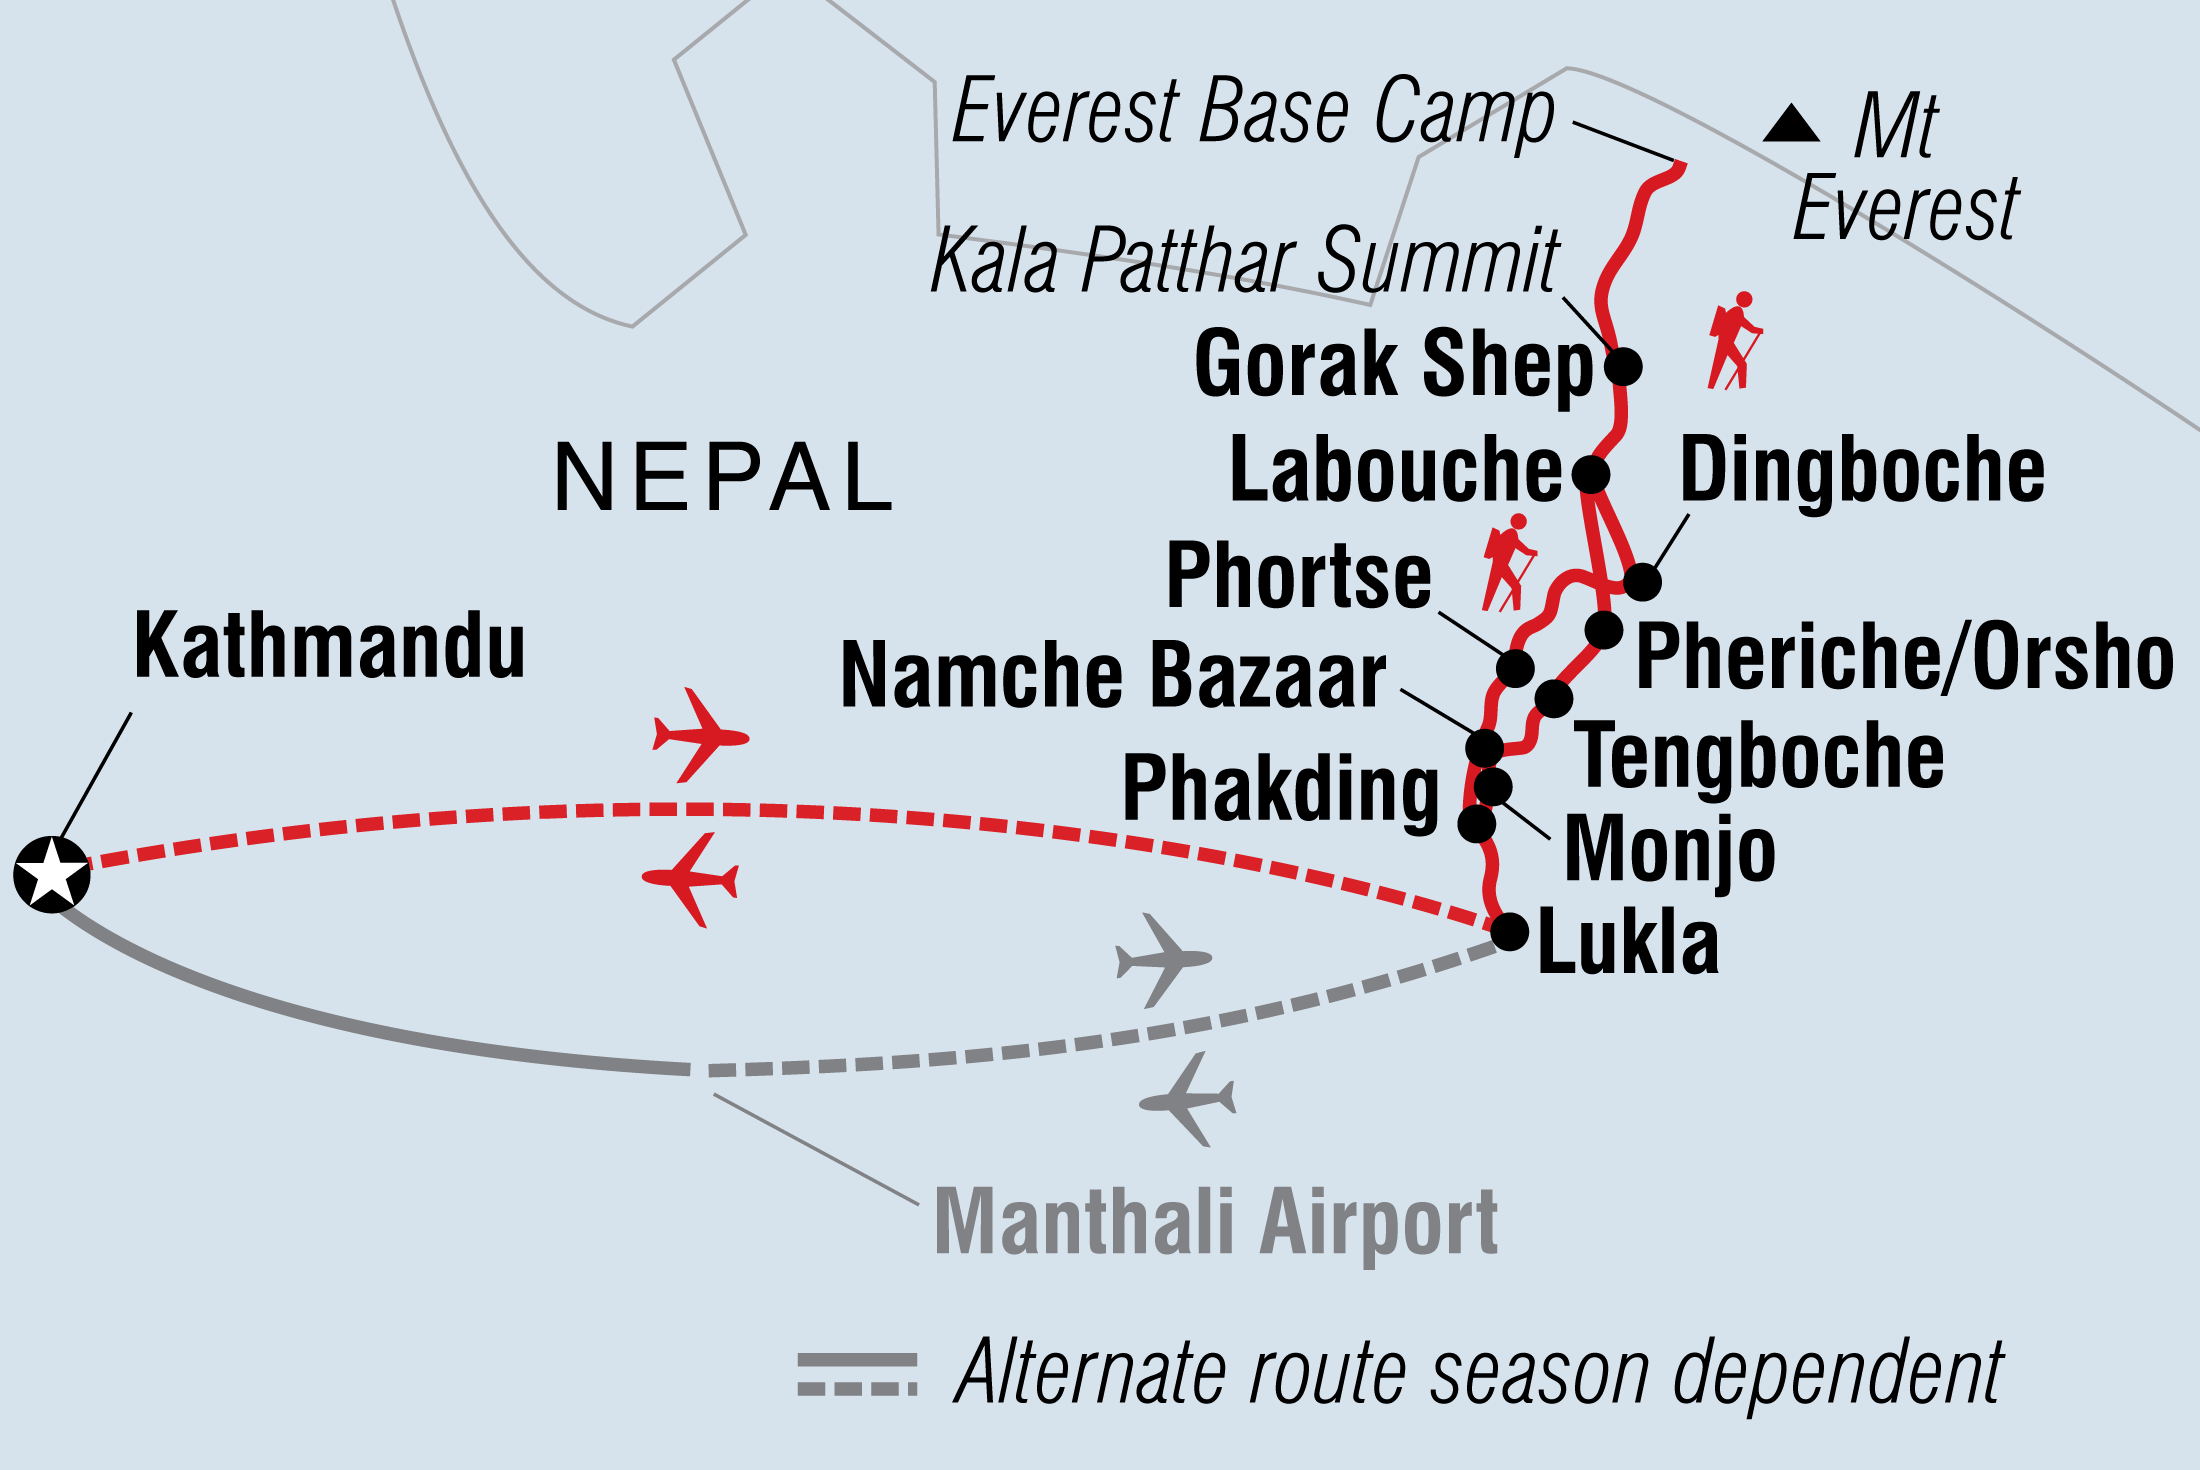 Map of Everest Base Camp Trek including Nepal